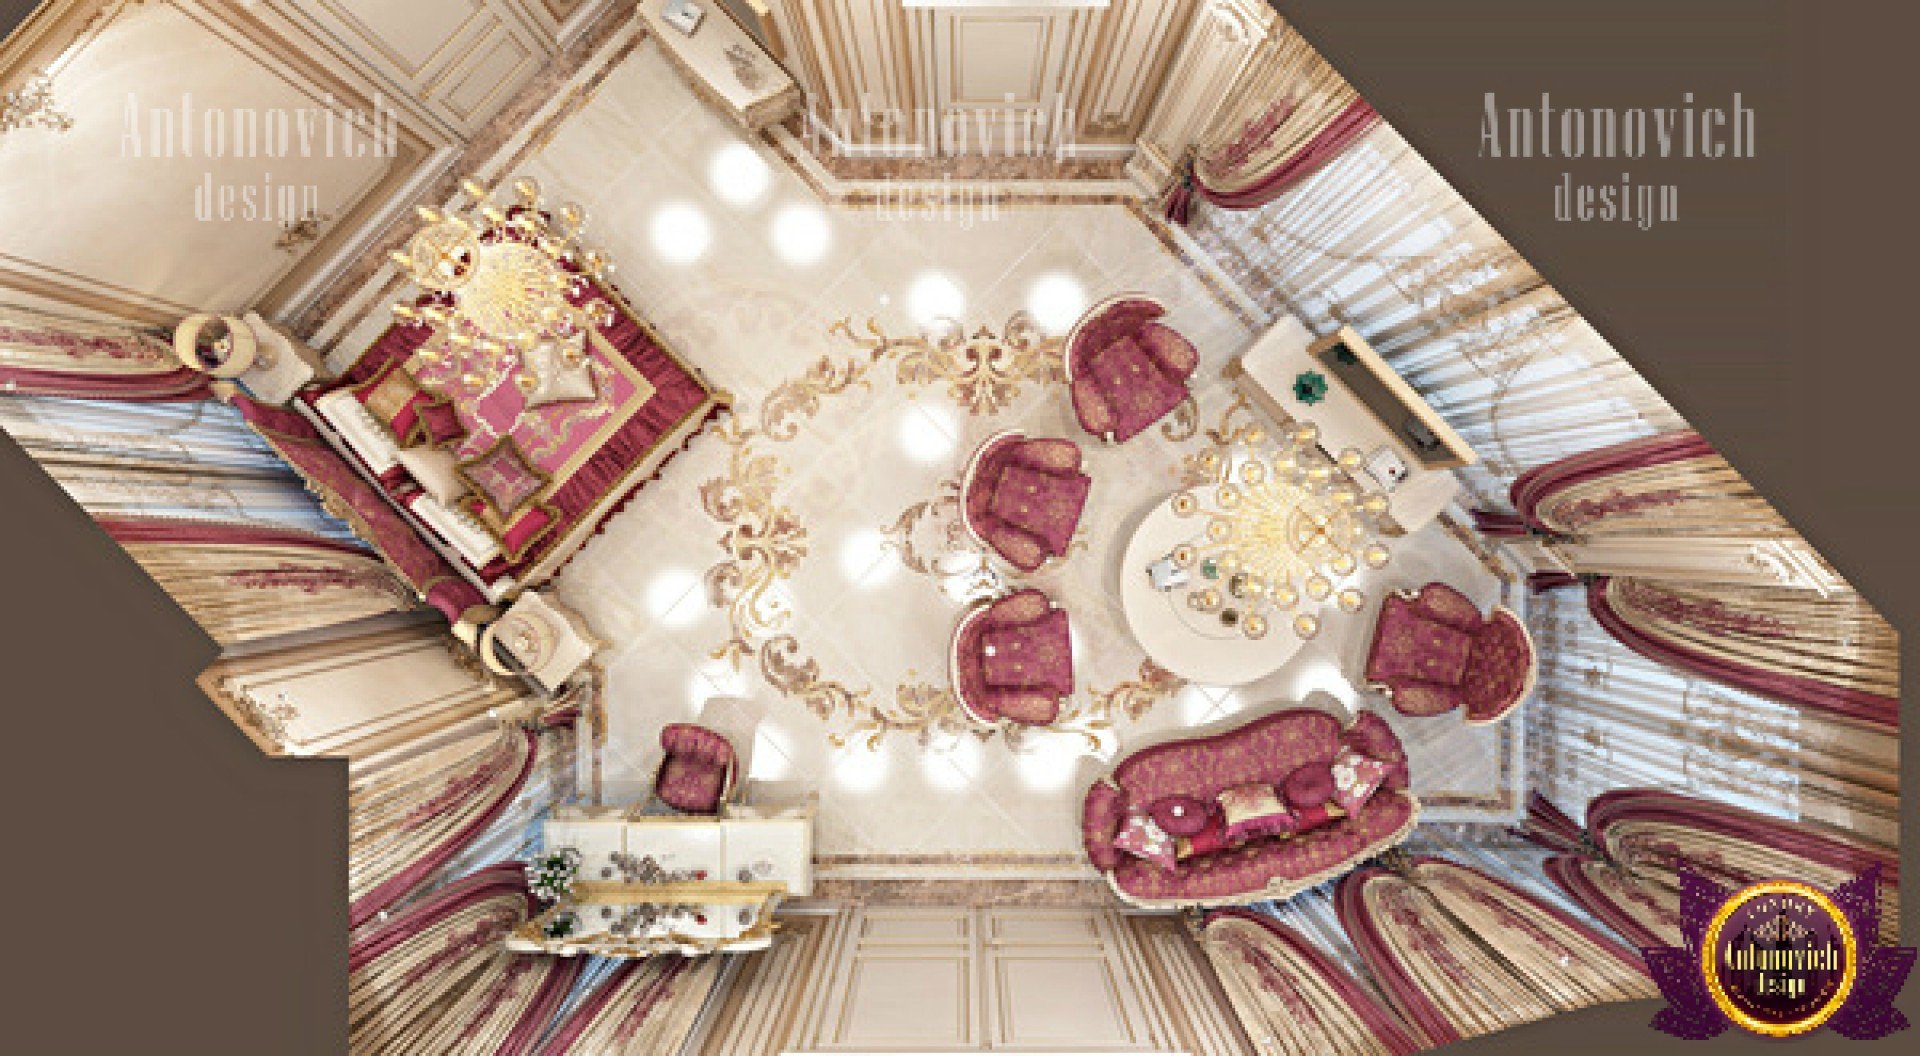 Luxurious master bedroom with elegant chandelier